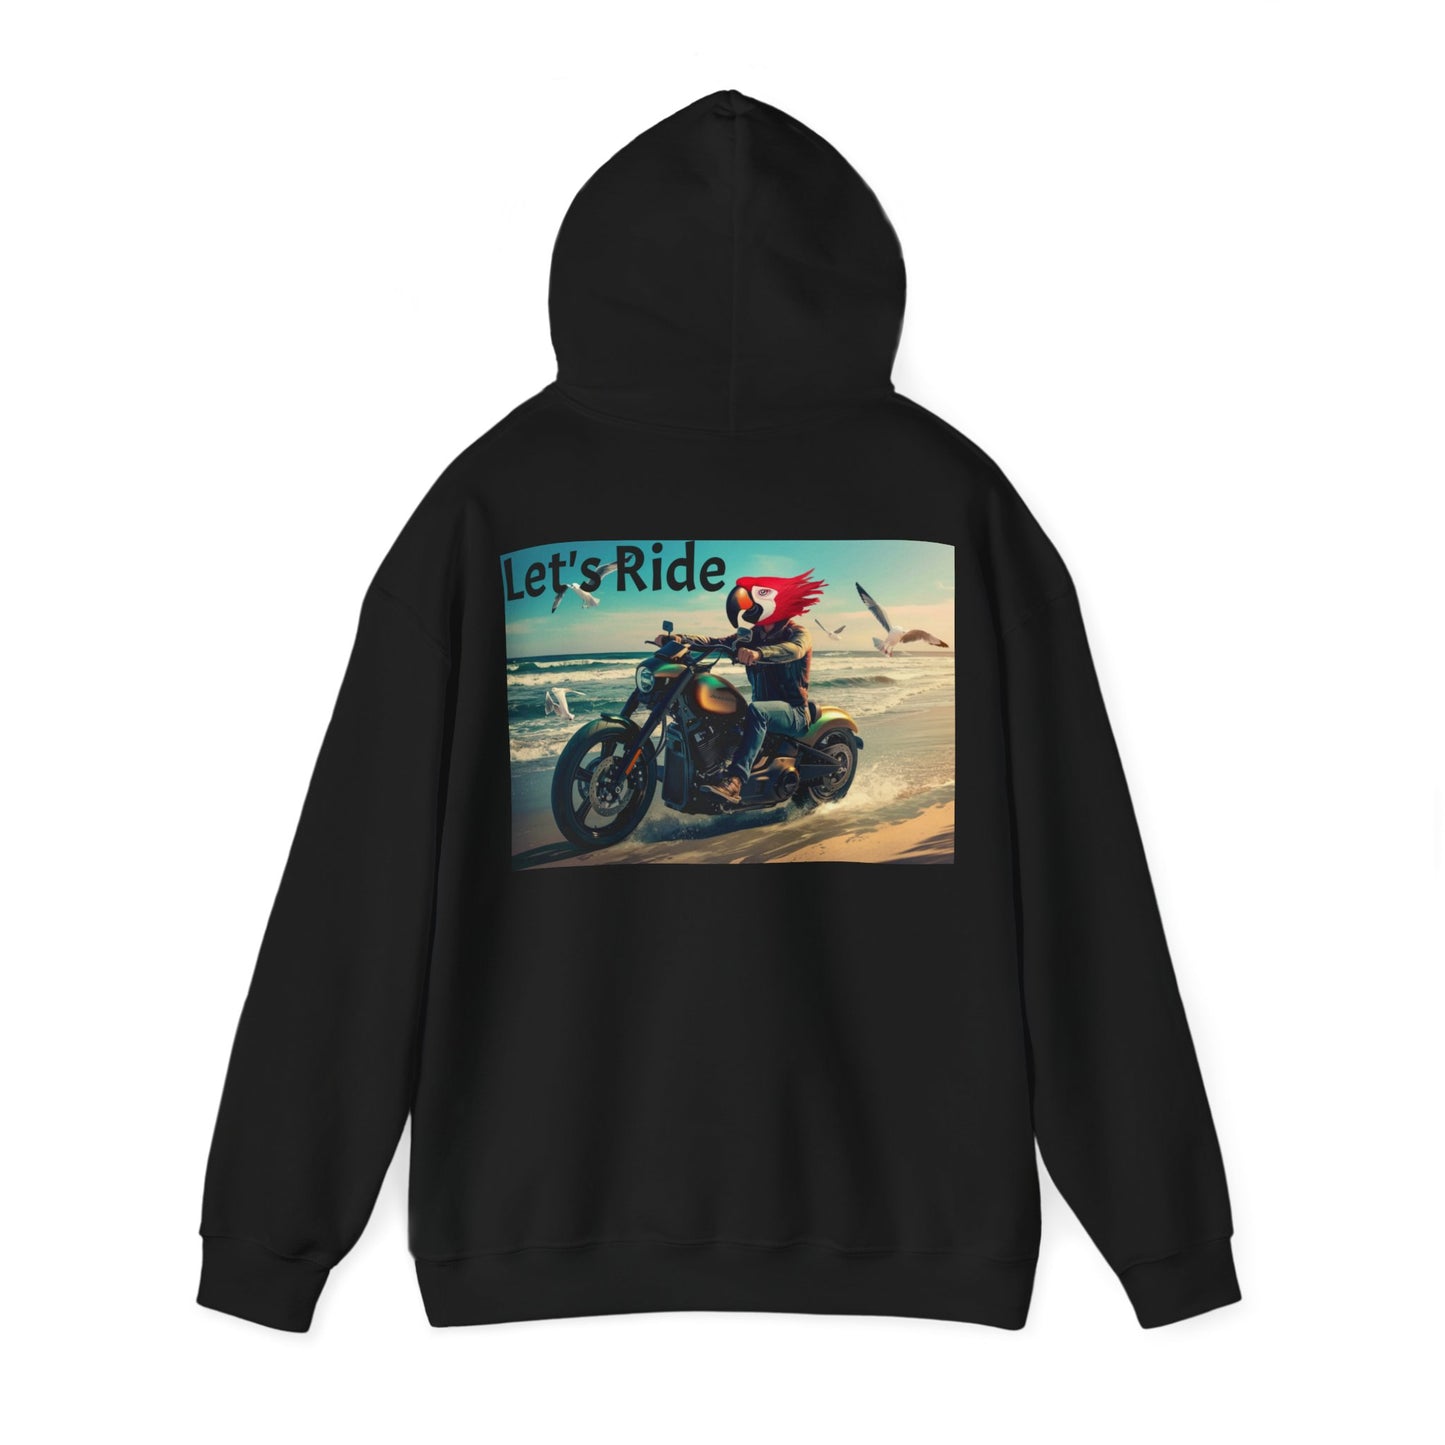 Let's Ride - Motorcyle on Beach - Hoodie